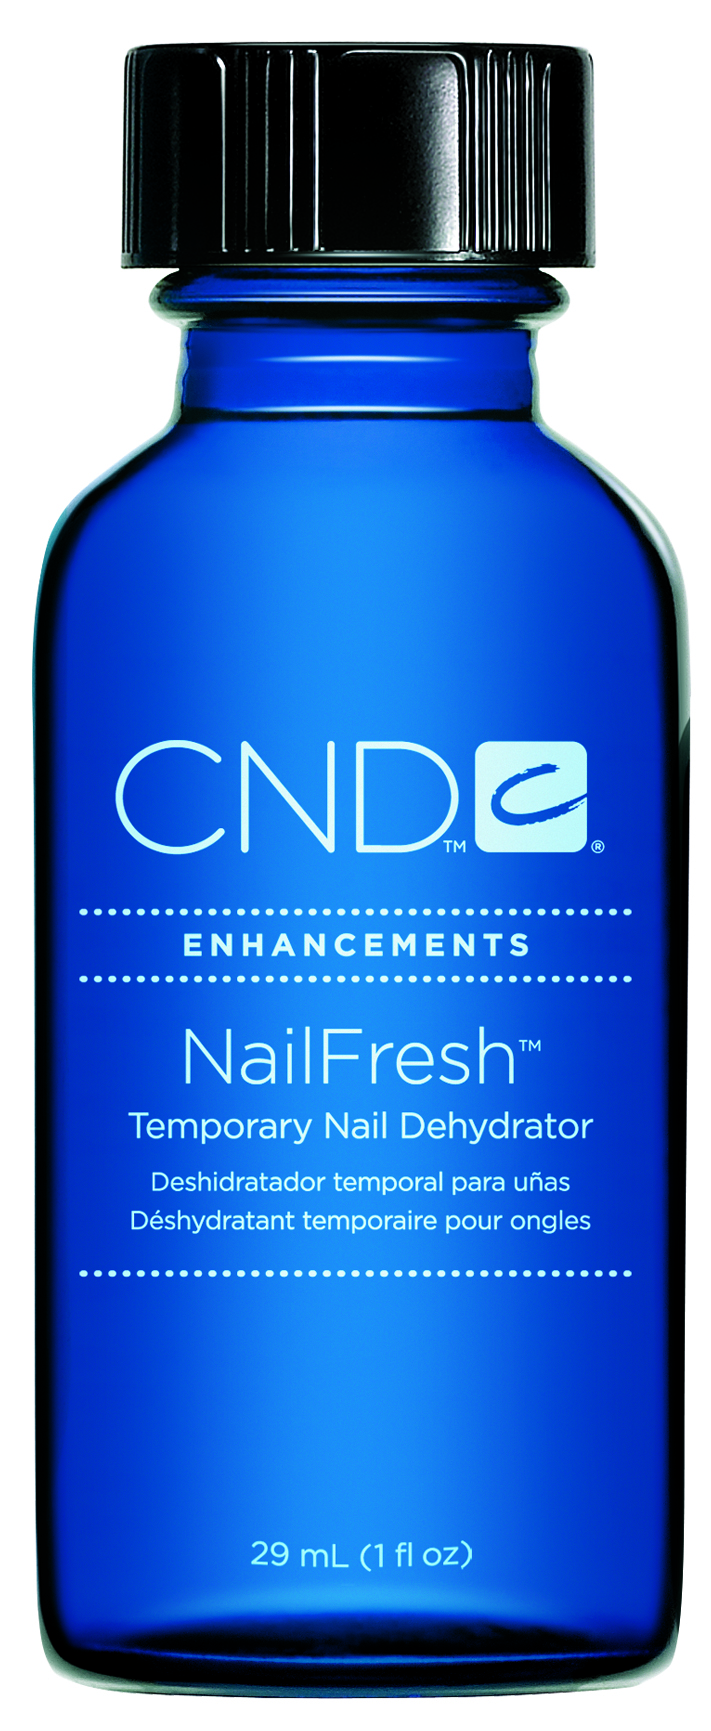 CND Препарат для краткосрочной дегидратации / Nail Fresh 29 